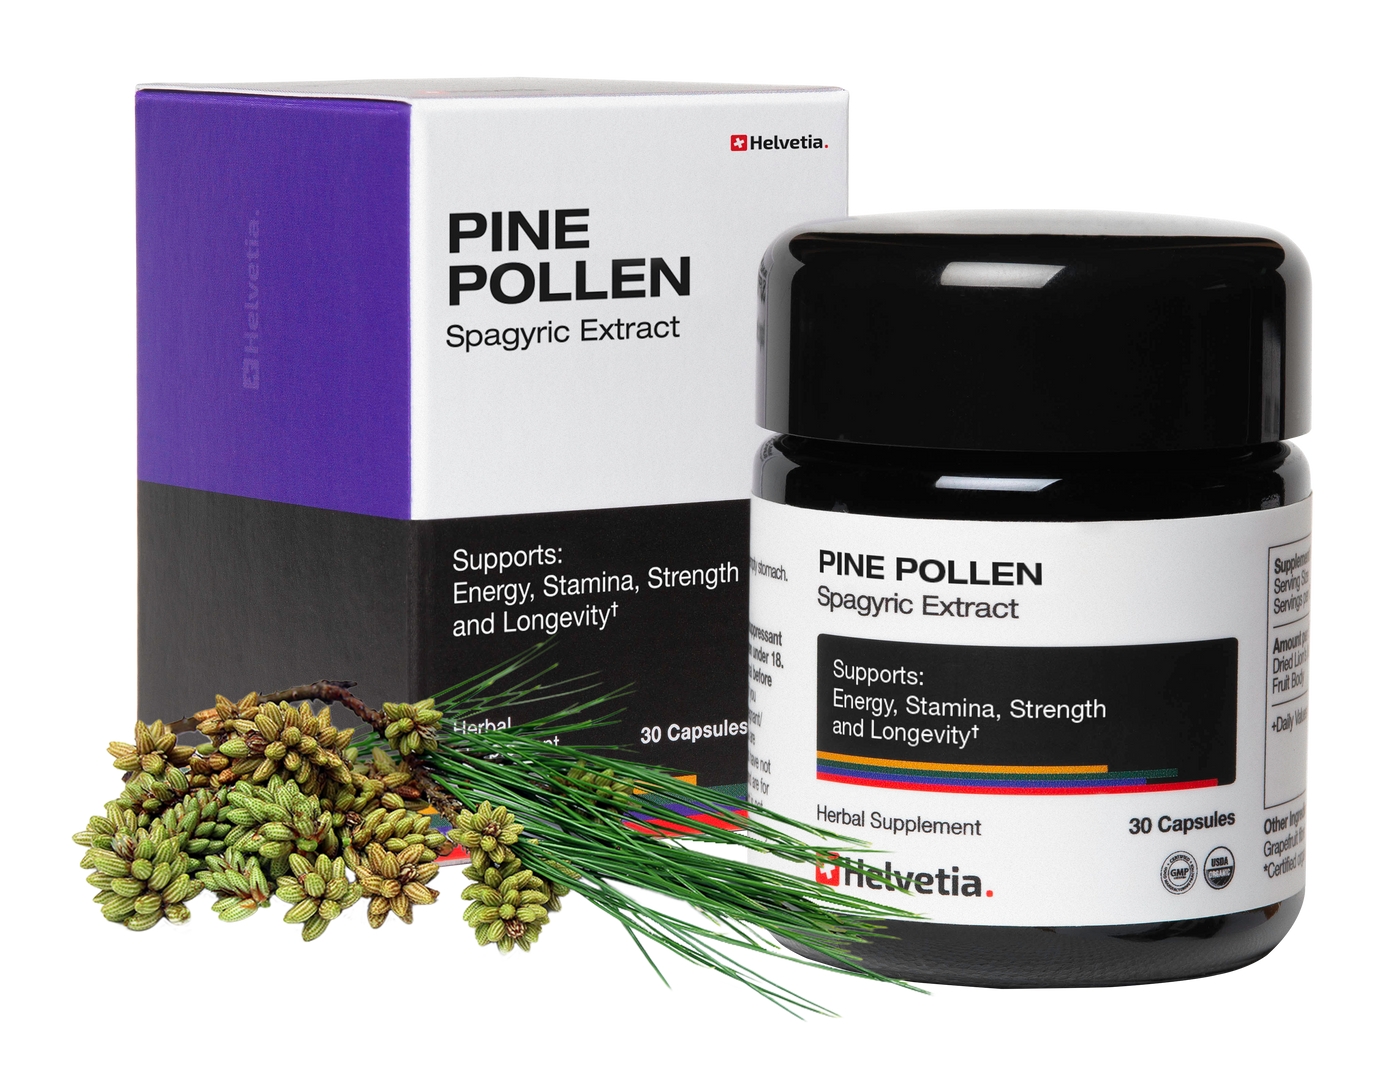 Pine Pollen Spagyric Extract